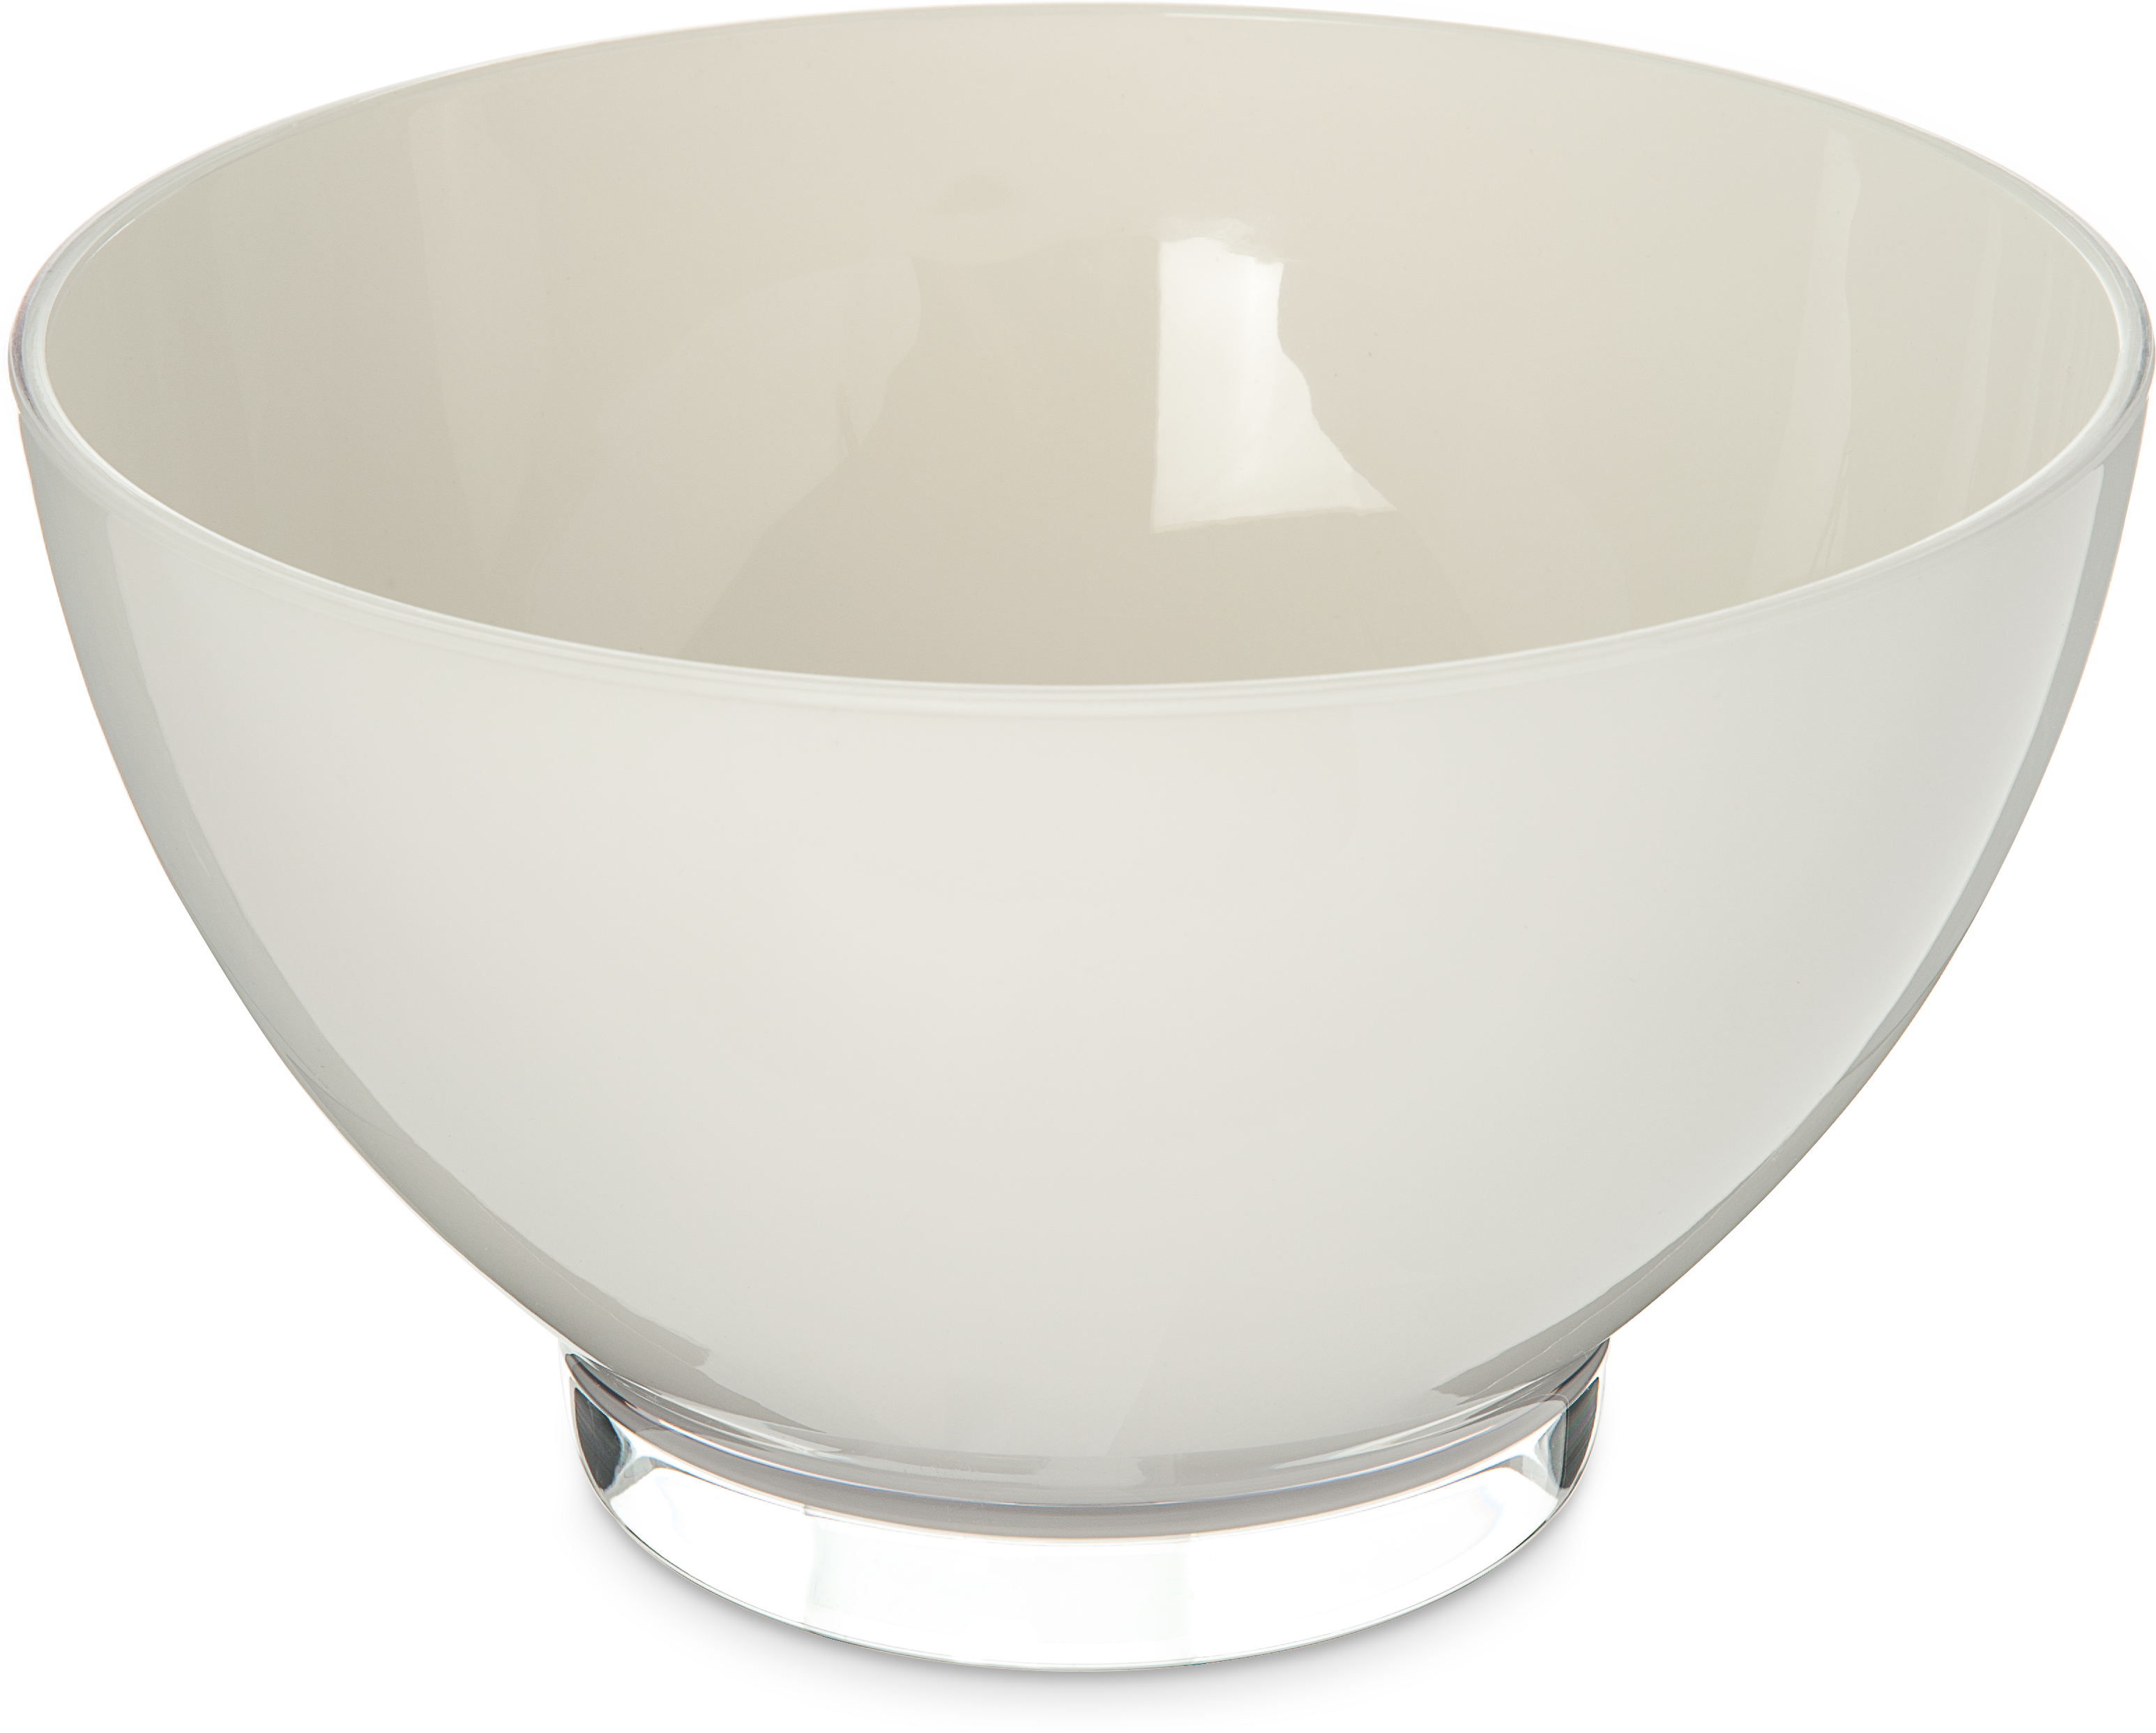 Epicure Cased Bowl 10 - White